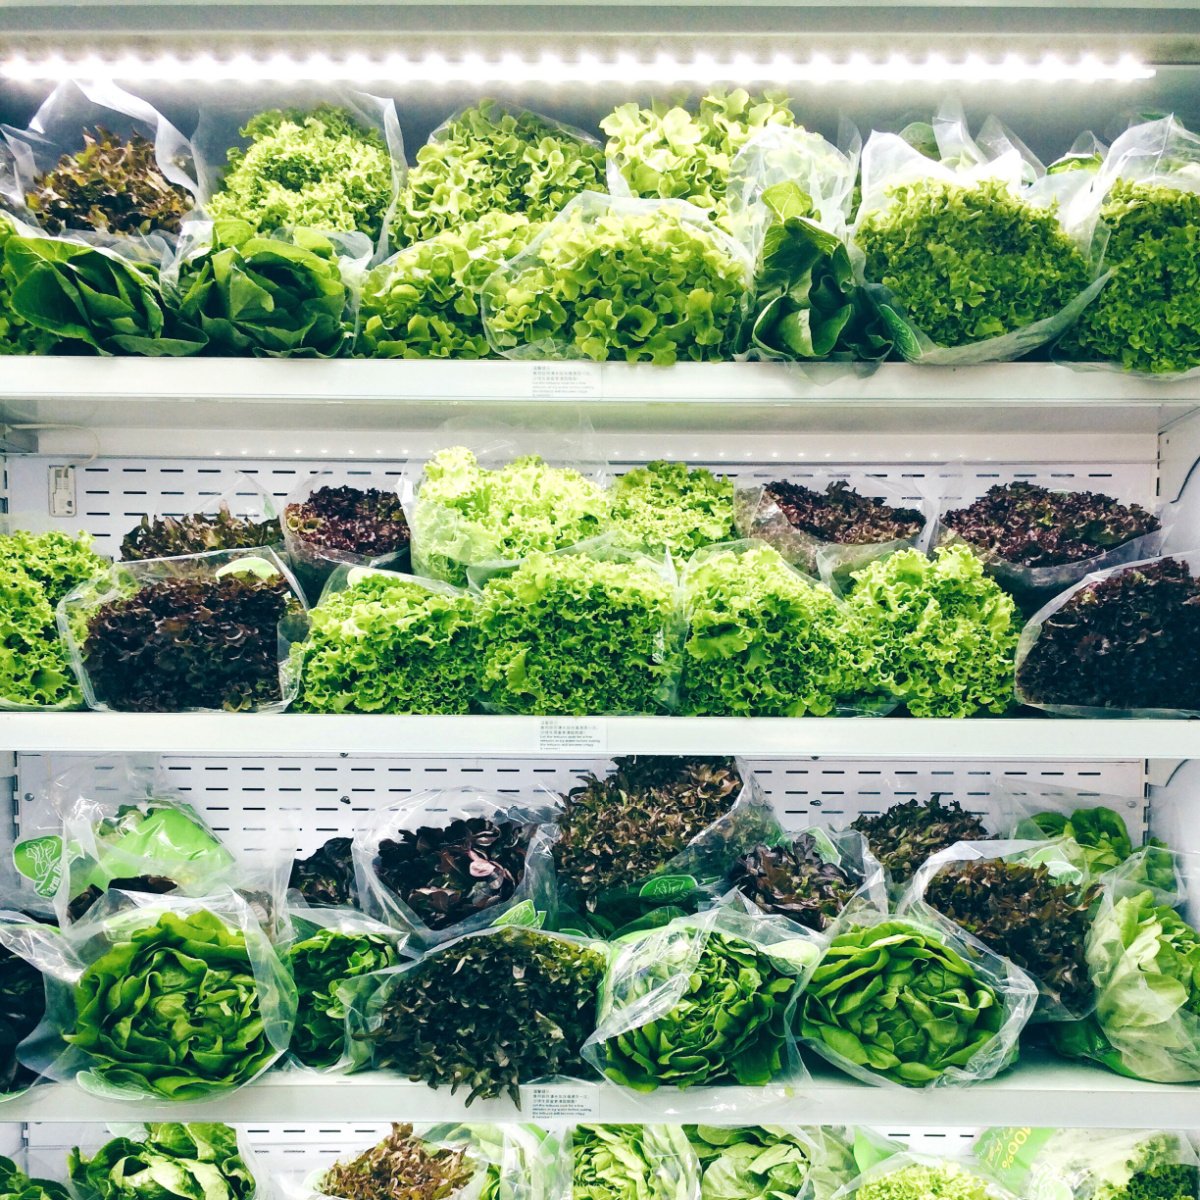 salad greens in the fridge